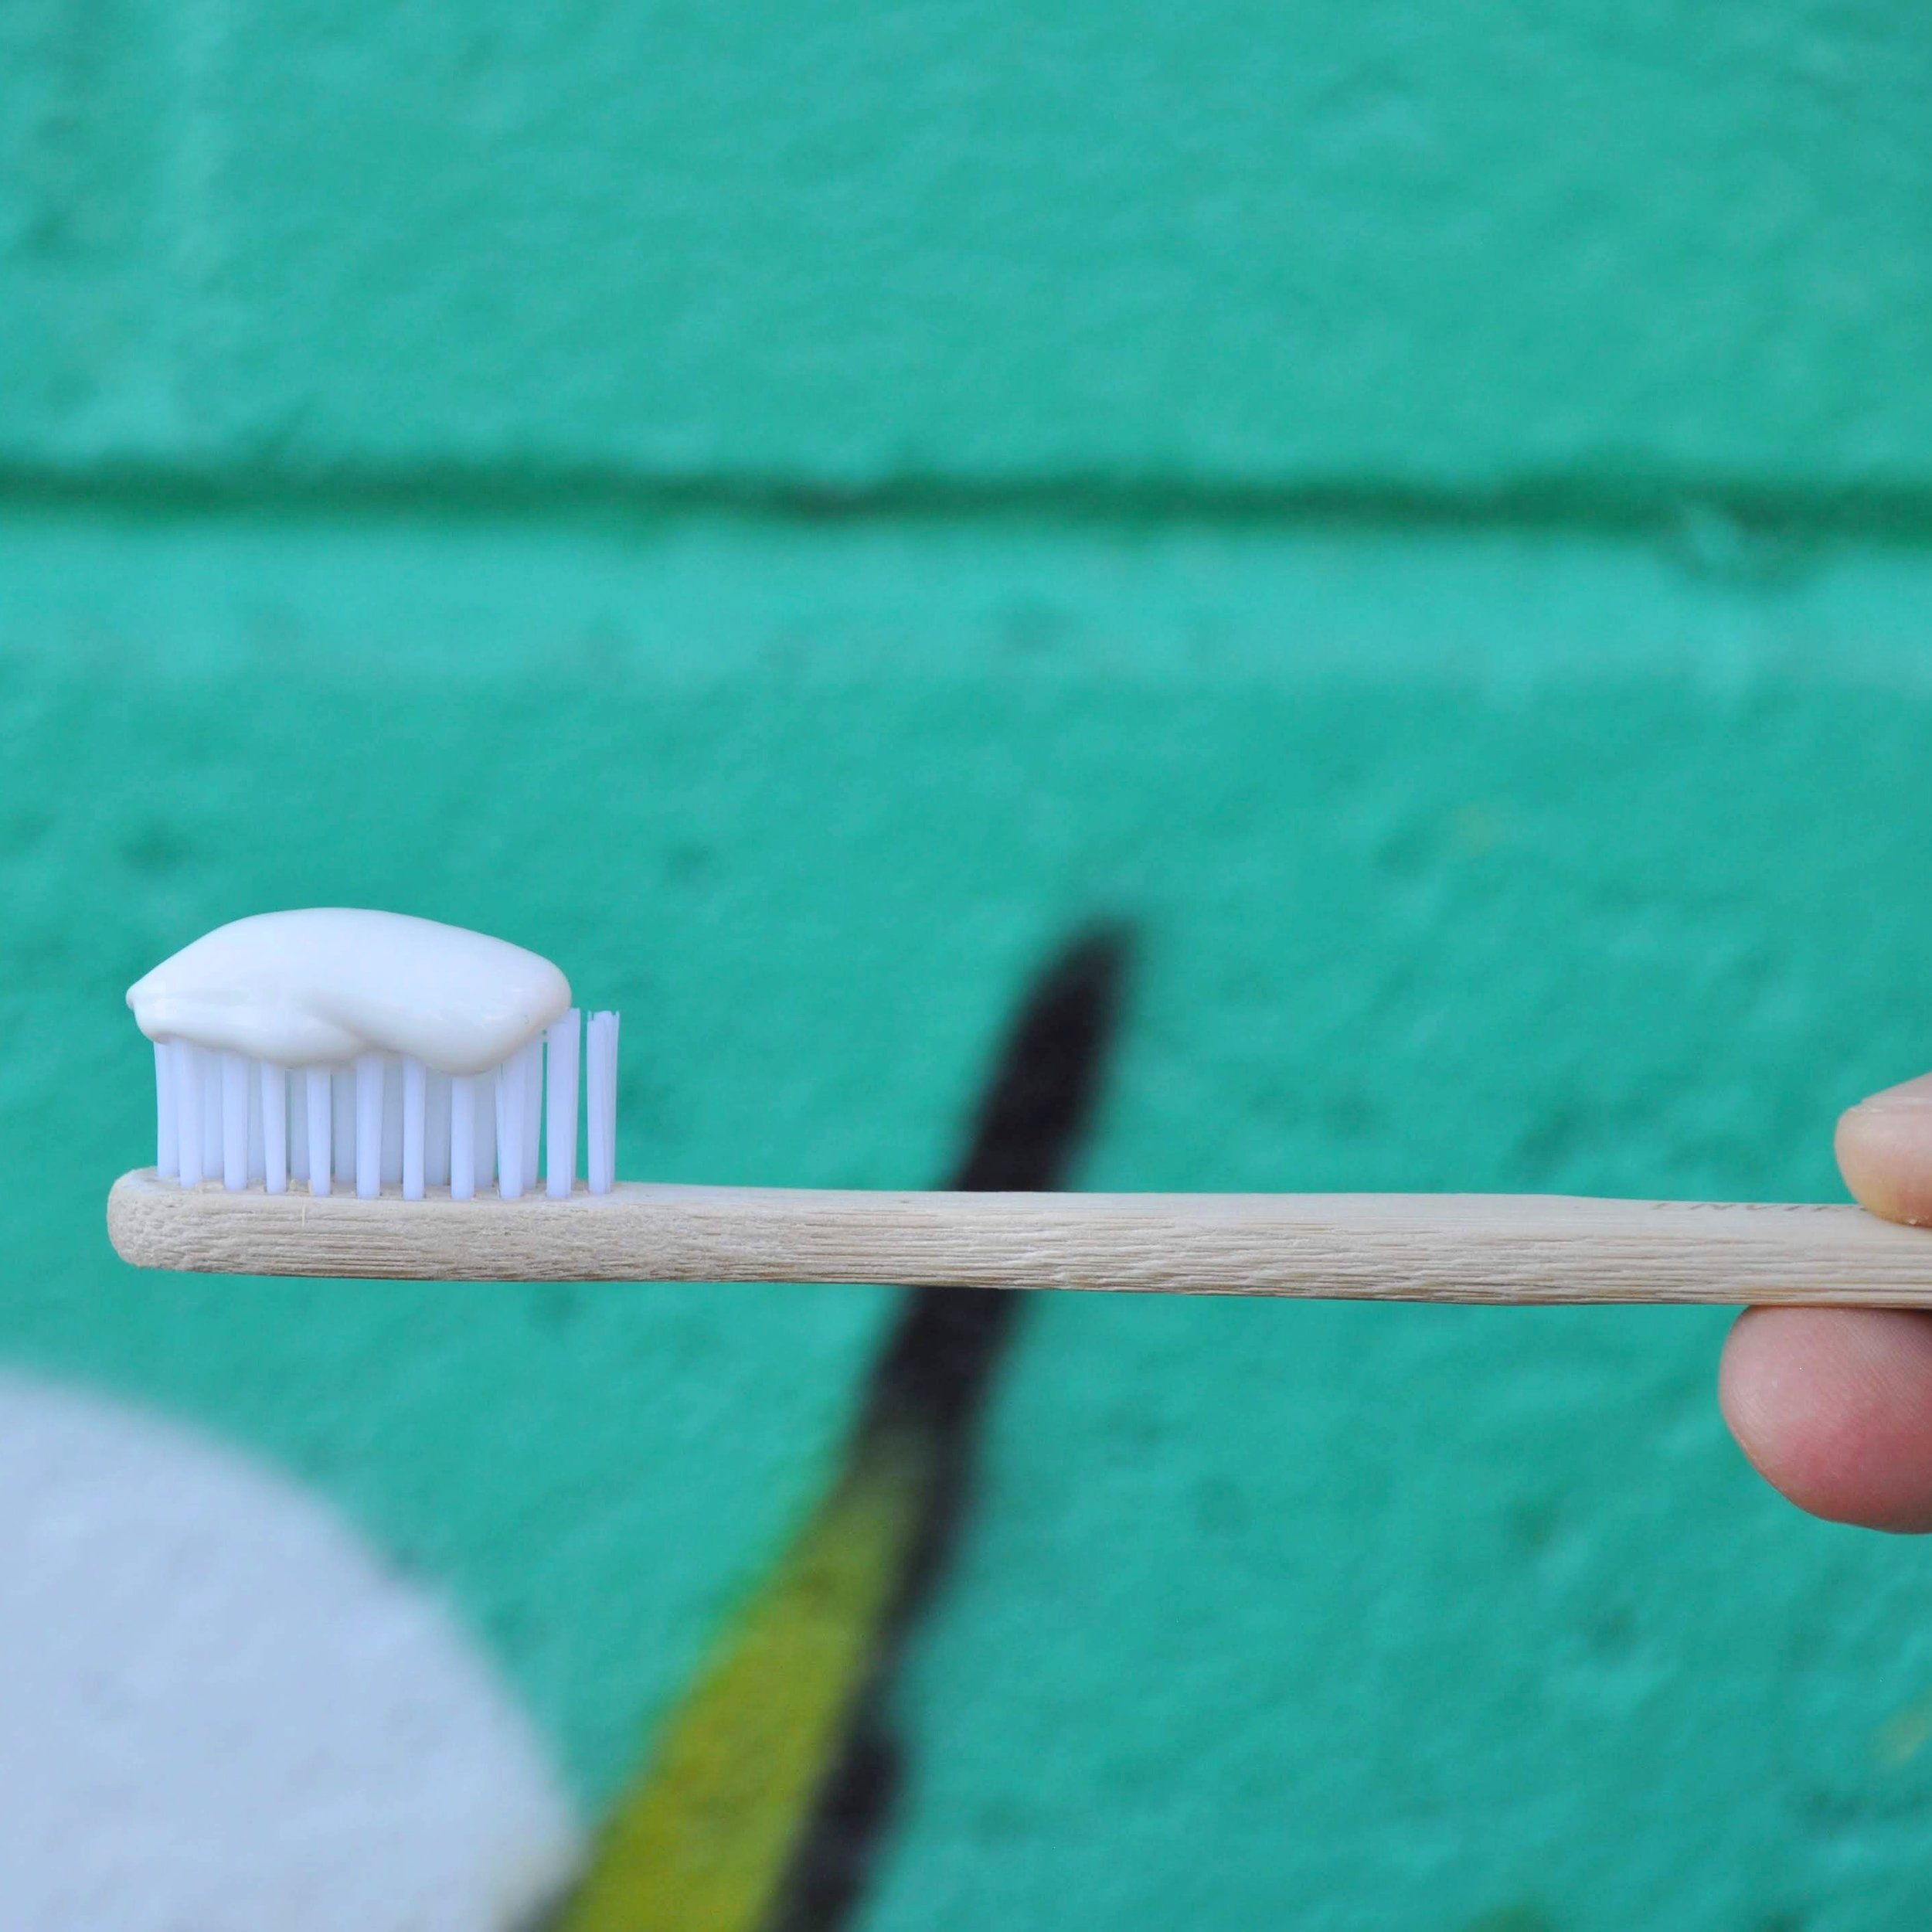 10. The Environmental Toothbrush